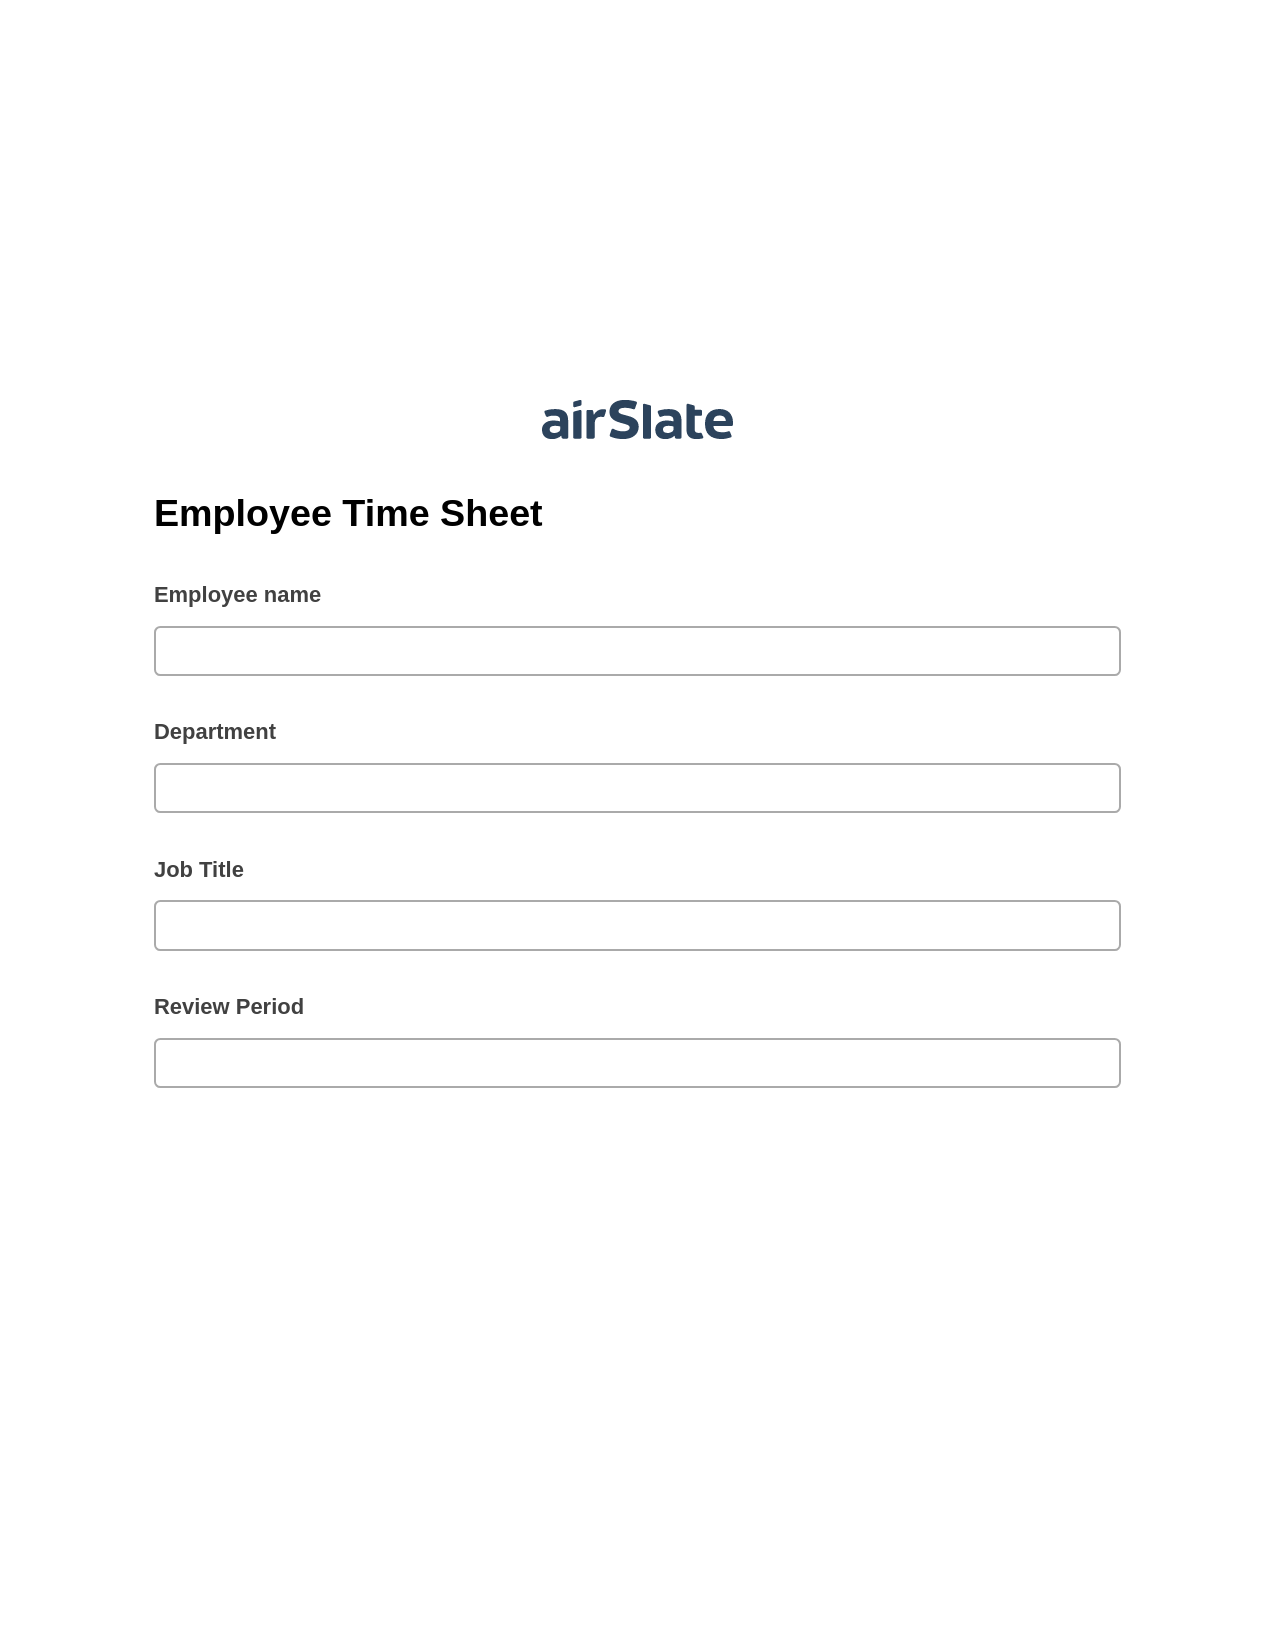 Employee Time Sheet Pre-fill from MySQL Bot, Slack Notification Bot, Archive to OneDrive Bot